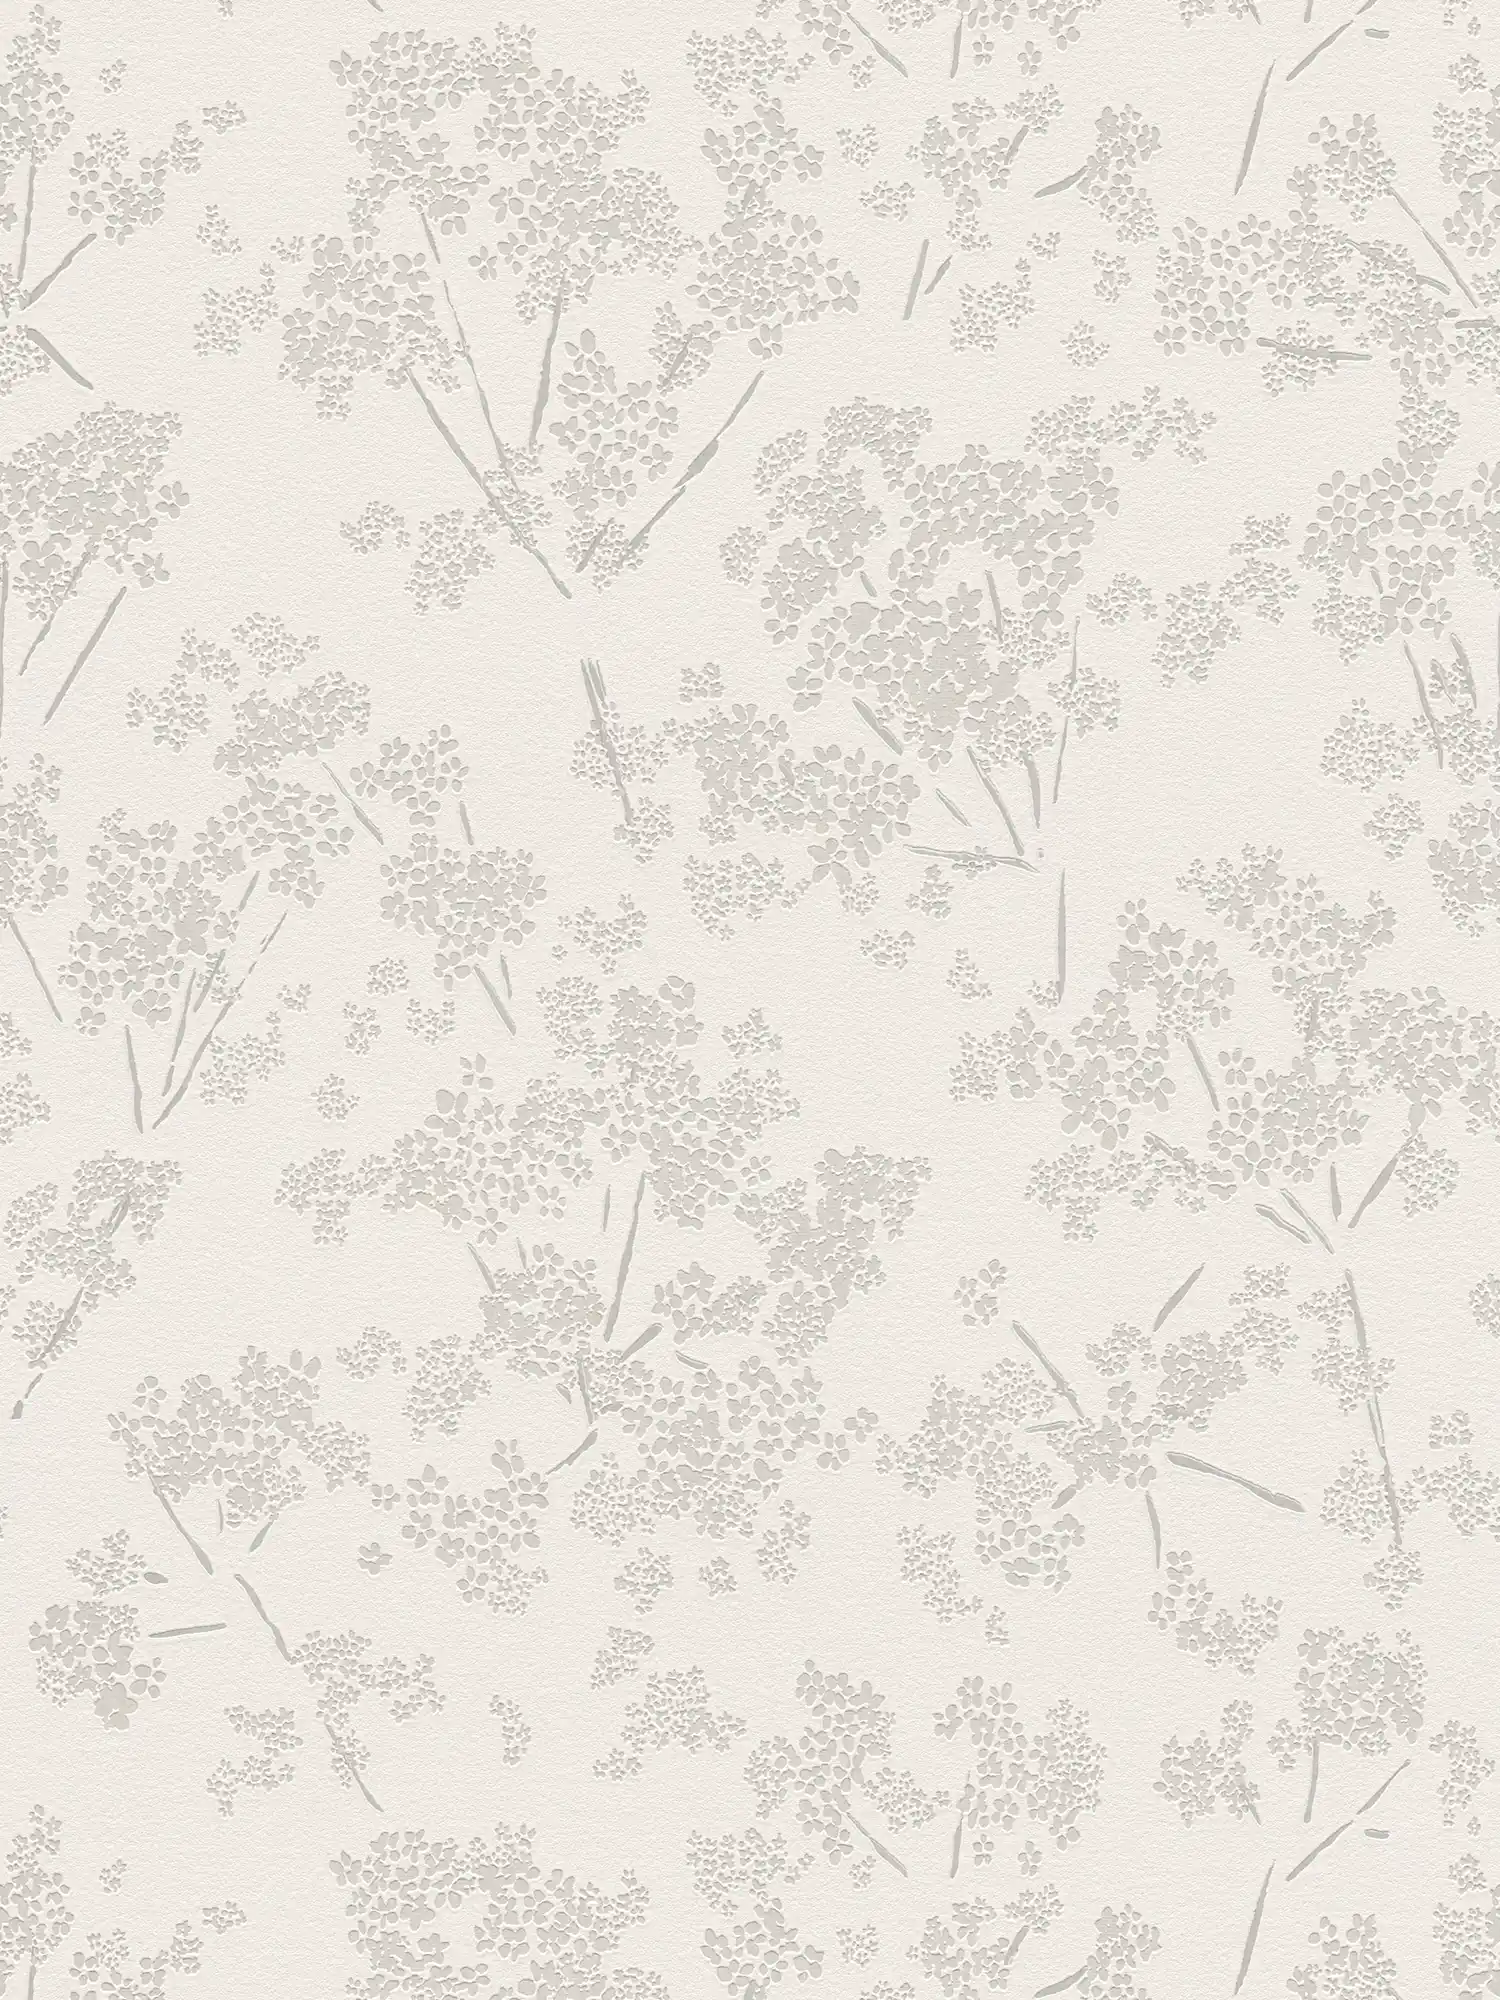 Vliestapete mit floralem Muster – Weiß, Grau
